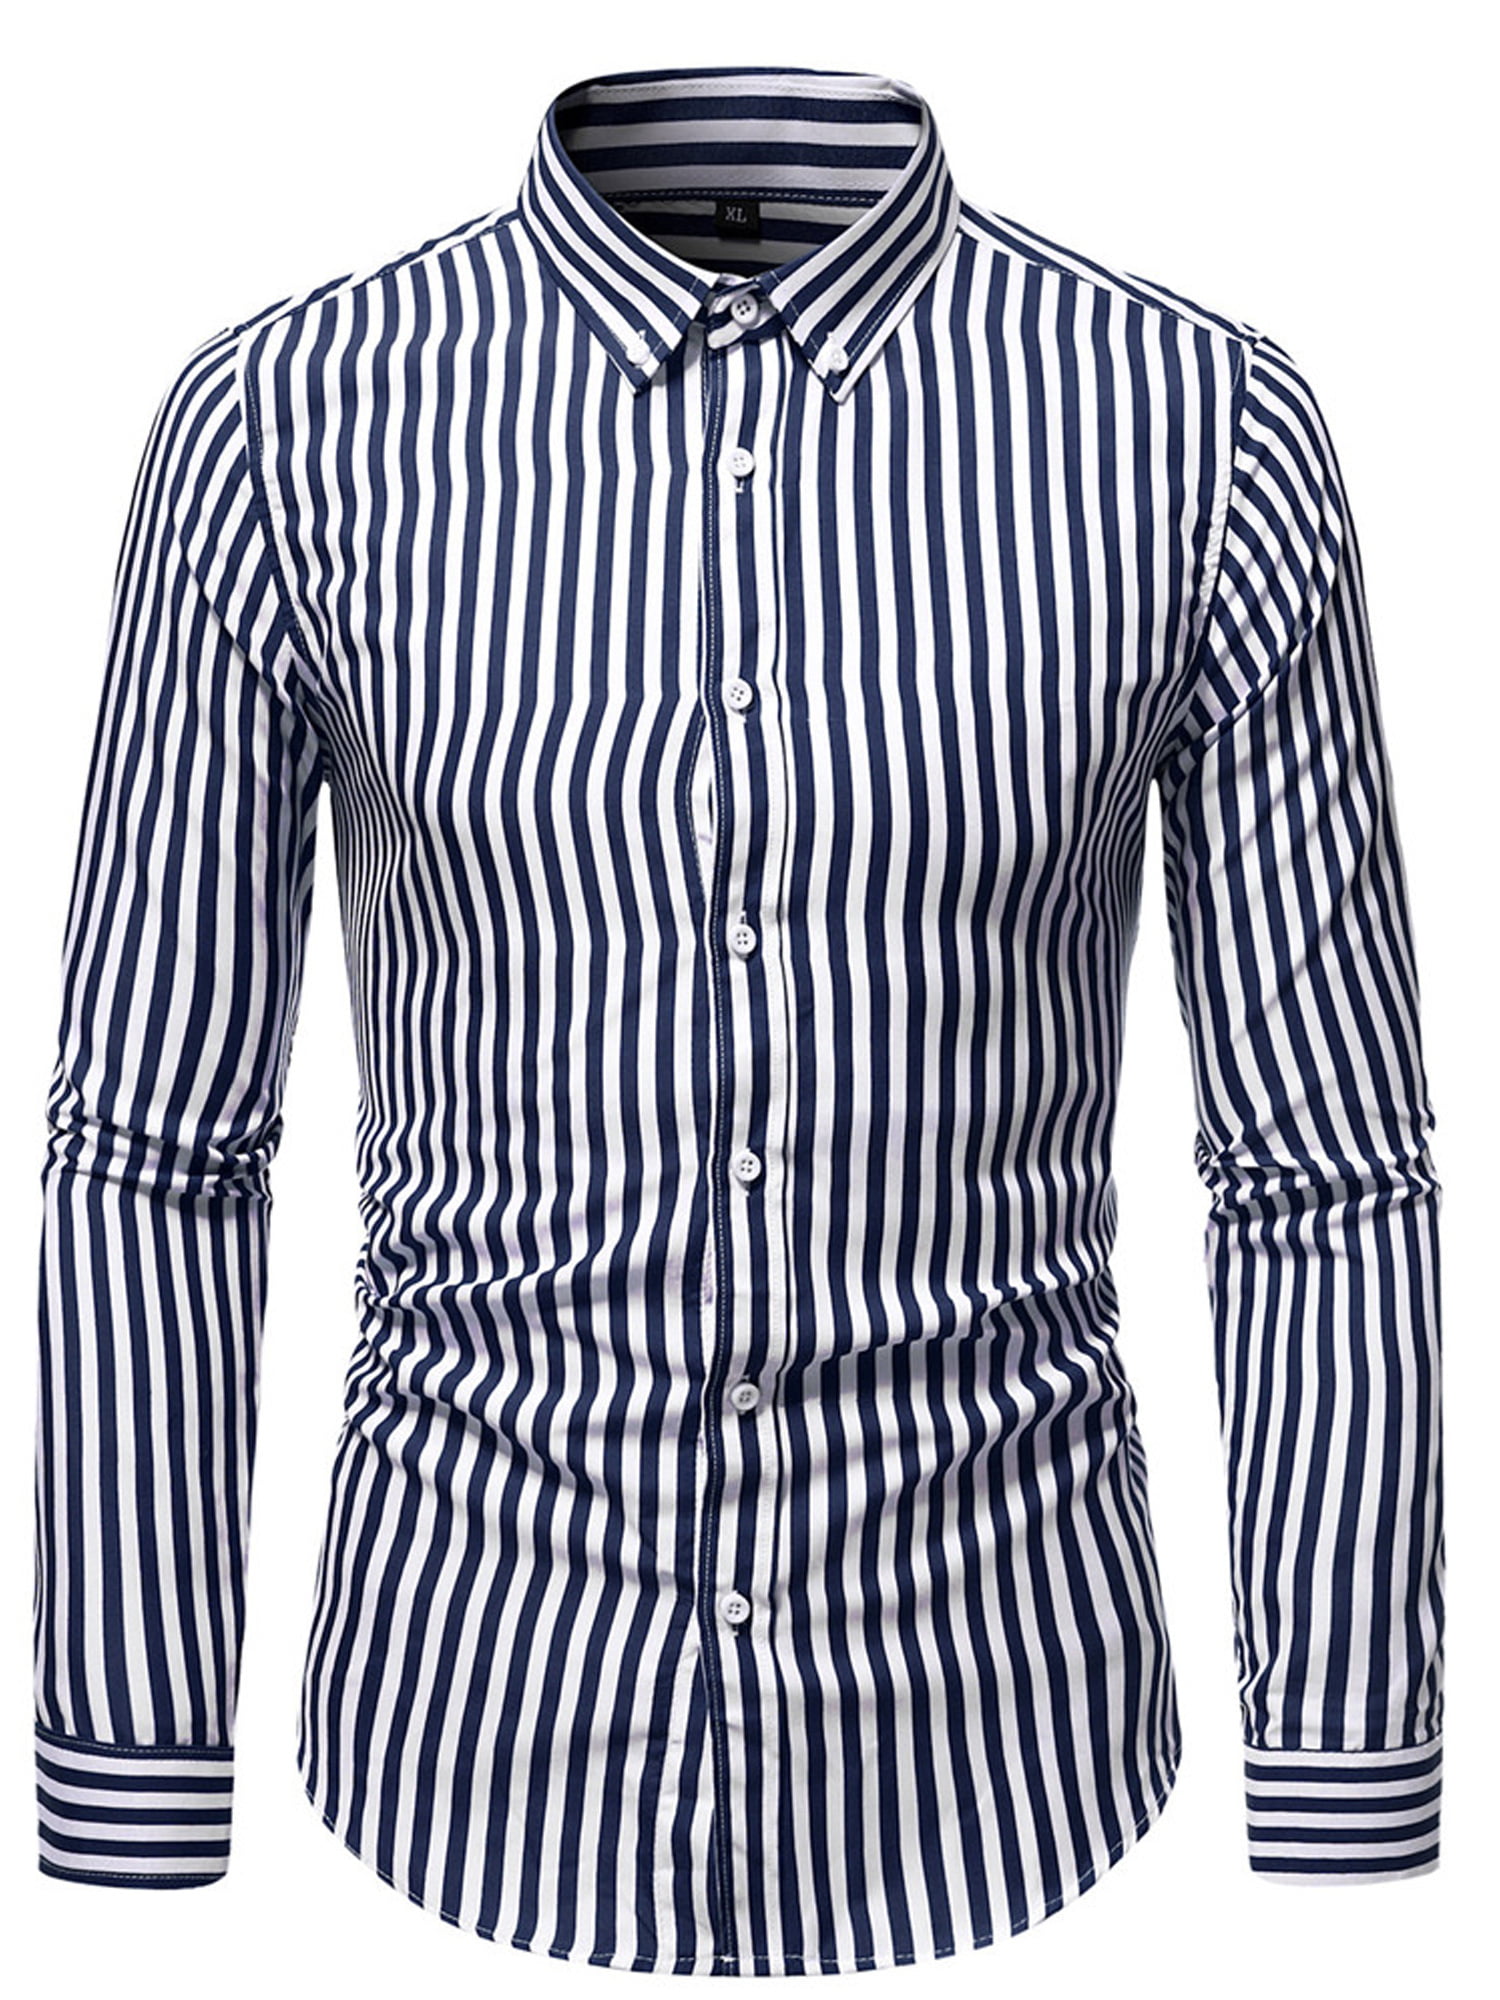 Mens Business Shirt Long Sleeve Stripe Checkered Office Wear 